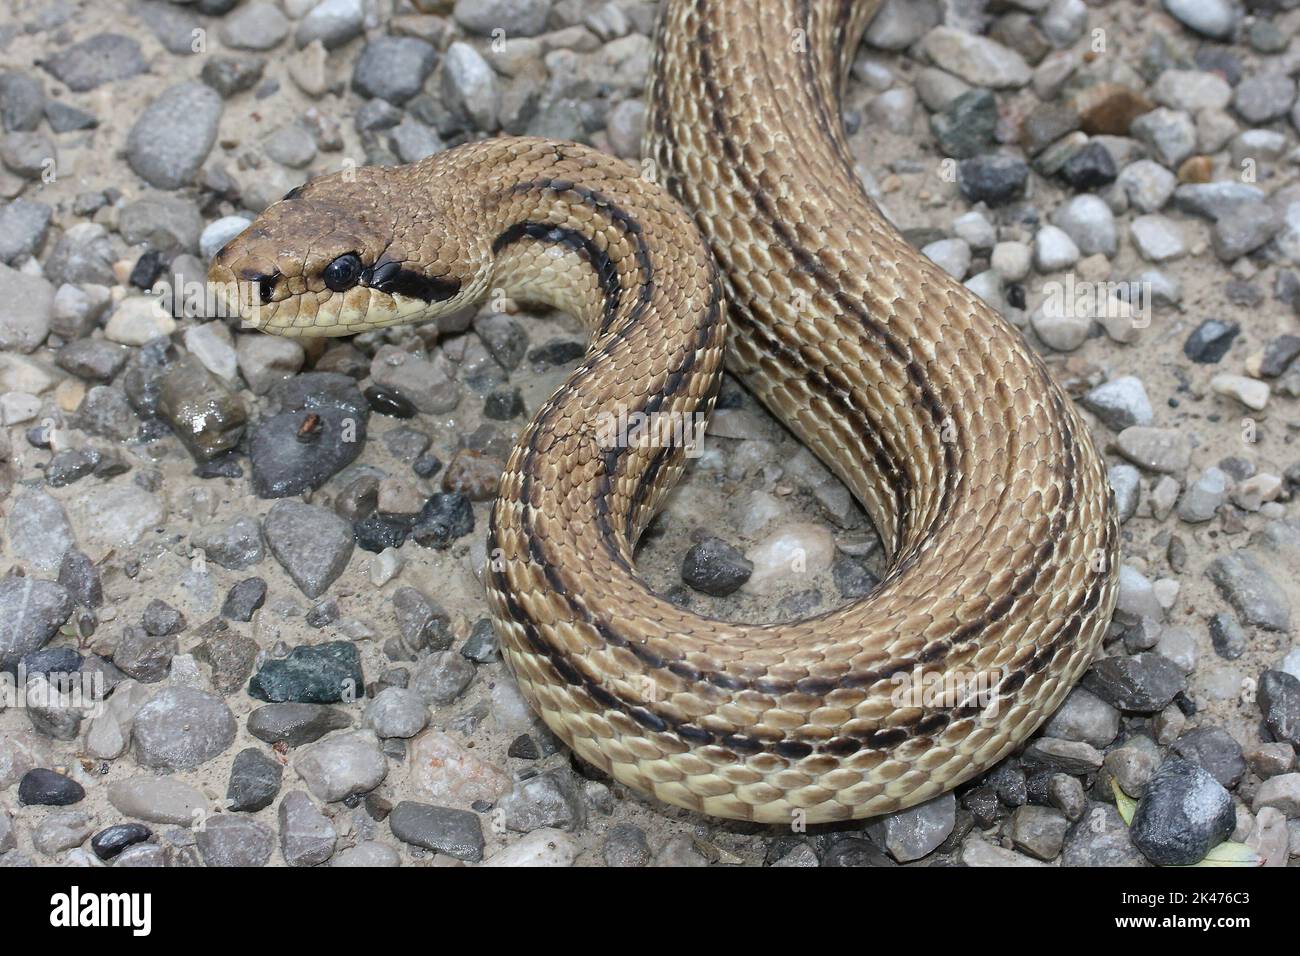 The four-lined snake, Bulgarian ratsnake (Elaphe quatuorlineata) head detail in a natural stone habitat Stock Photo